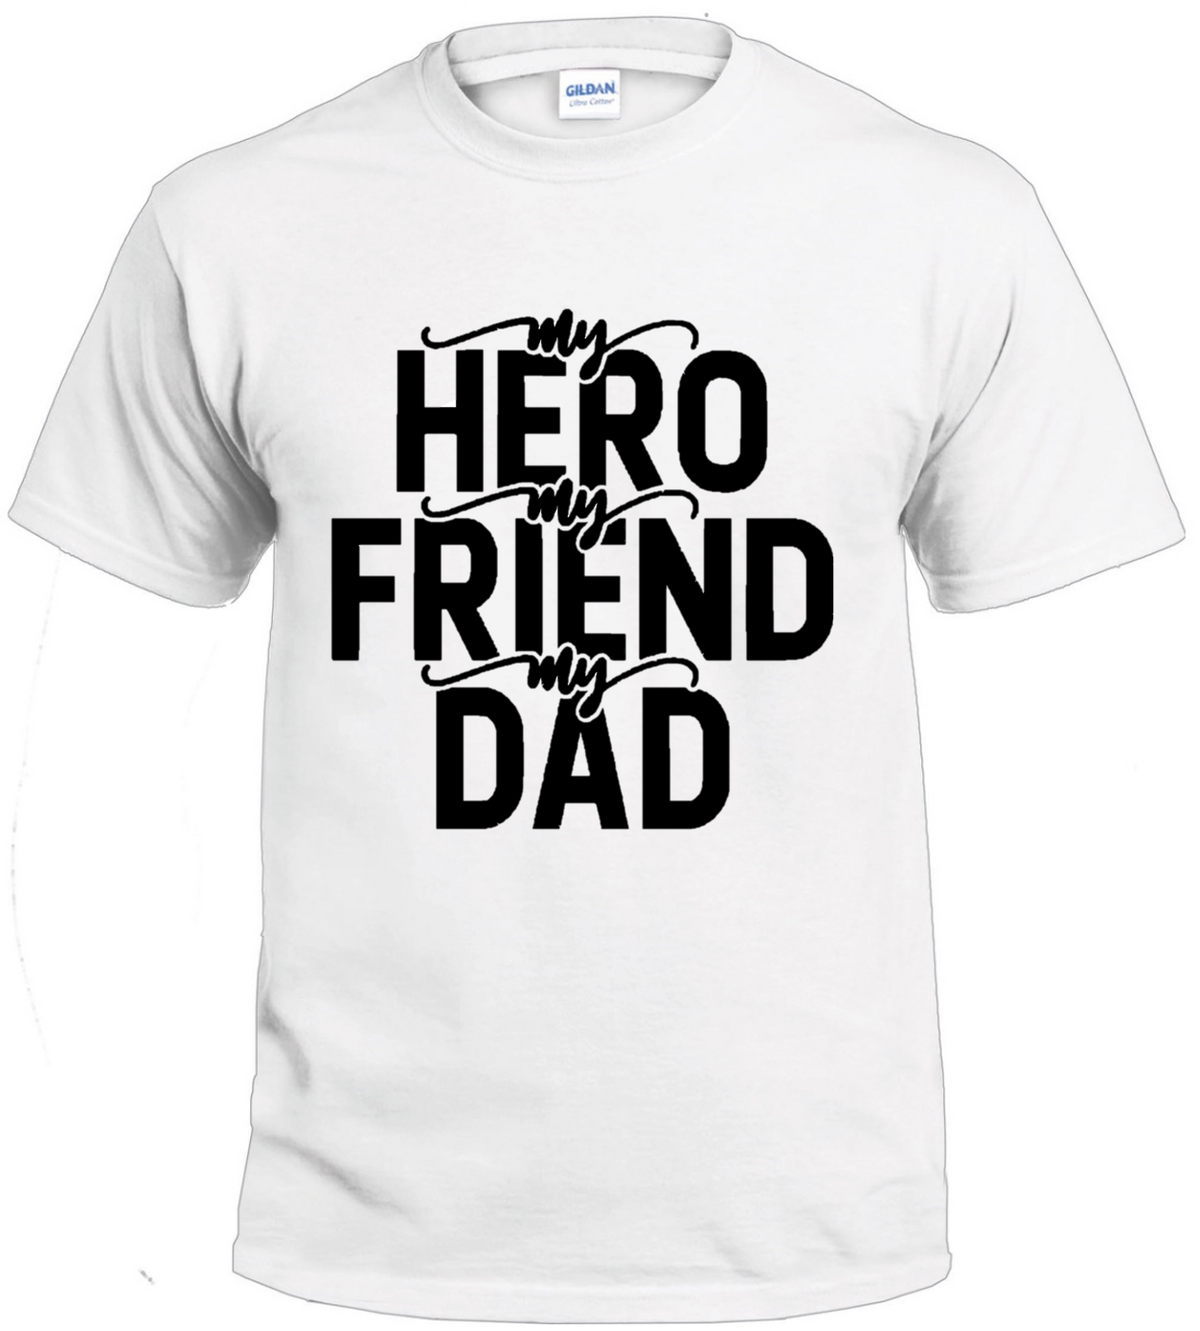 Hero Friend Dad t-shirt